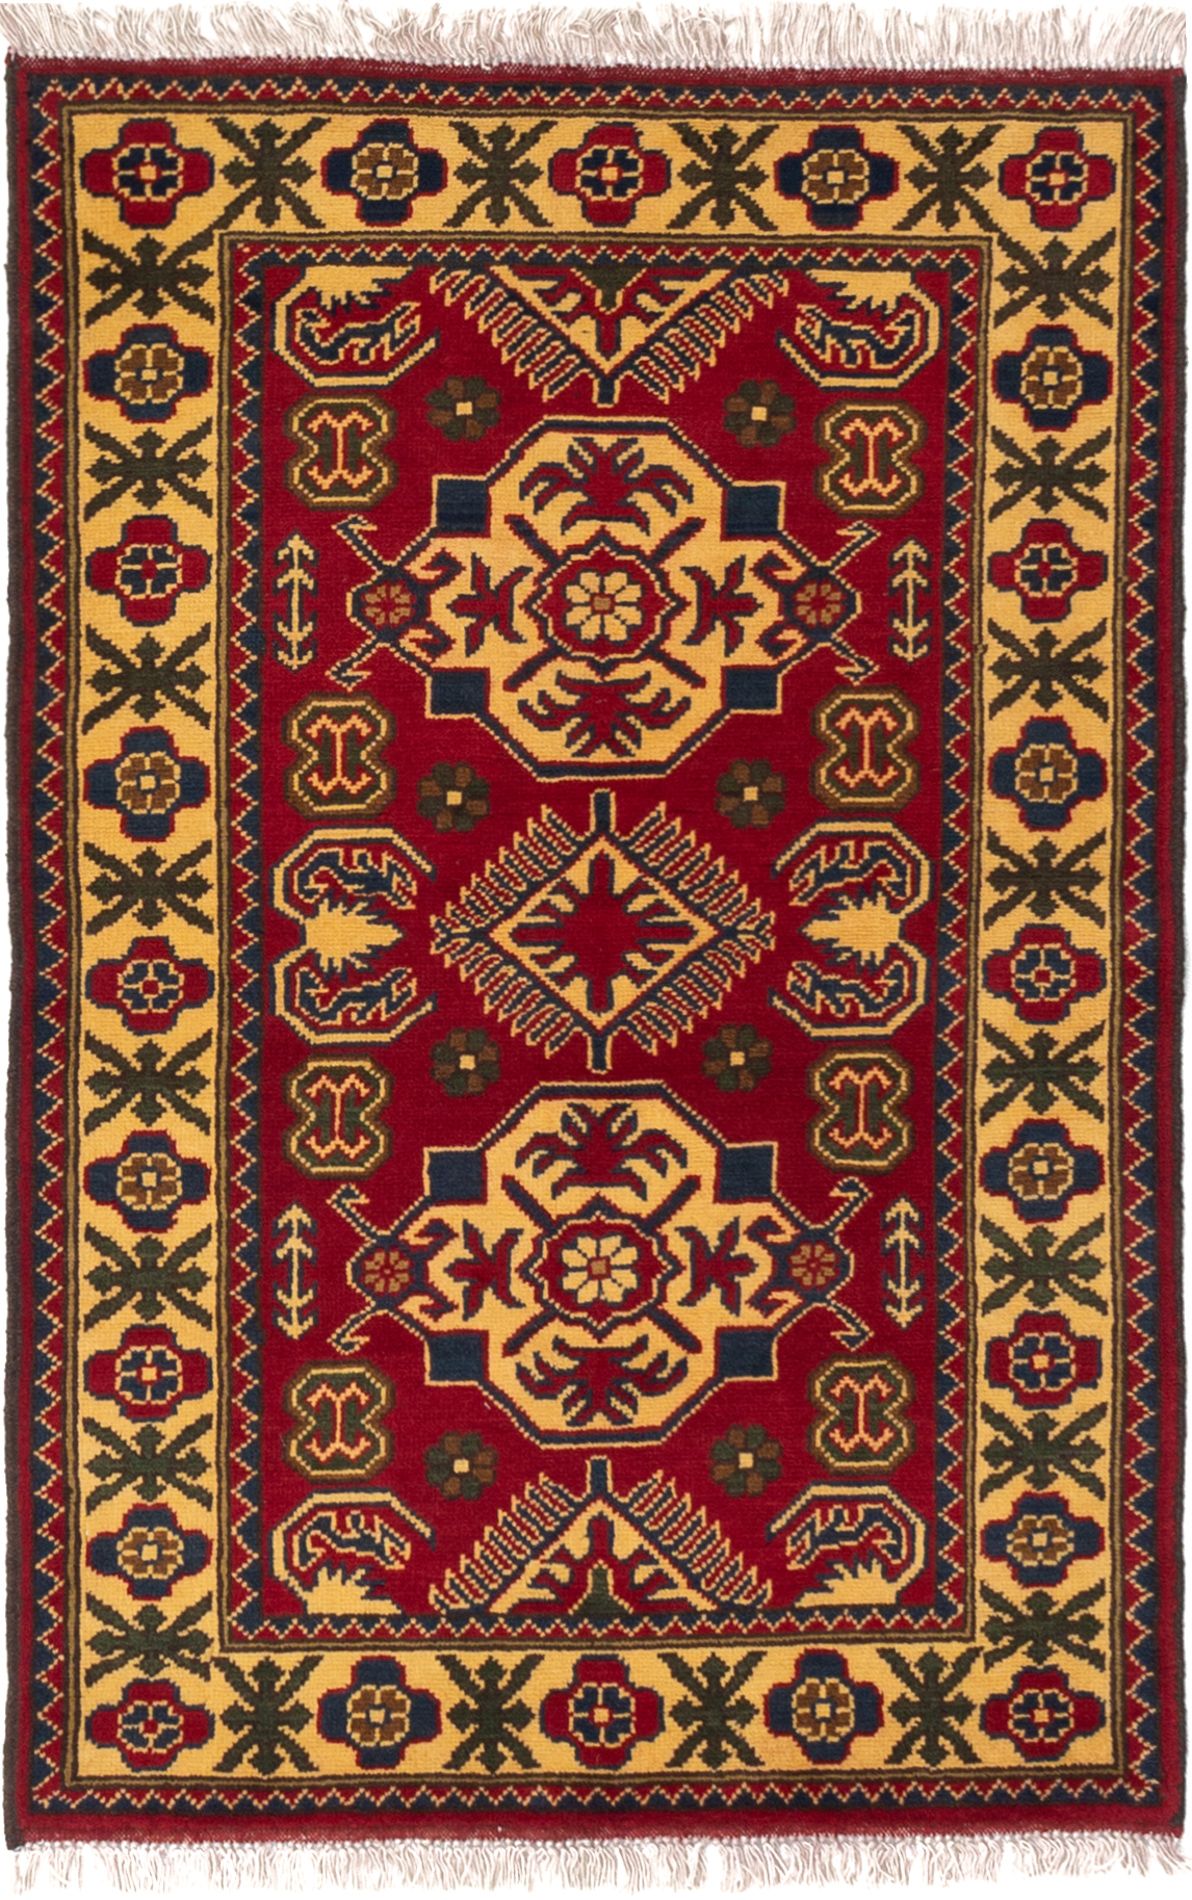 Hand-knotted Finest Kargahi Dark Red Wool Rug 2'9" x 4'2" Size: 2'9" x 4'2"  